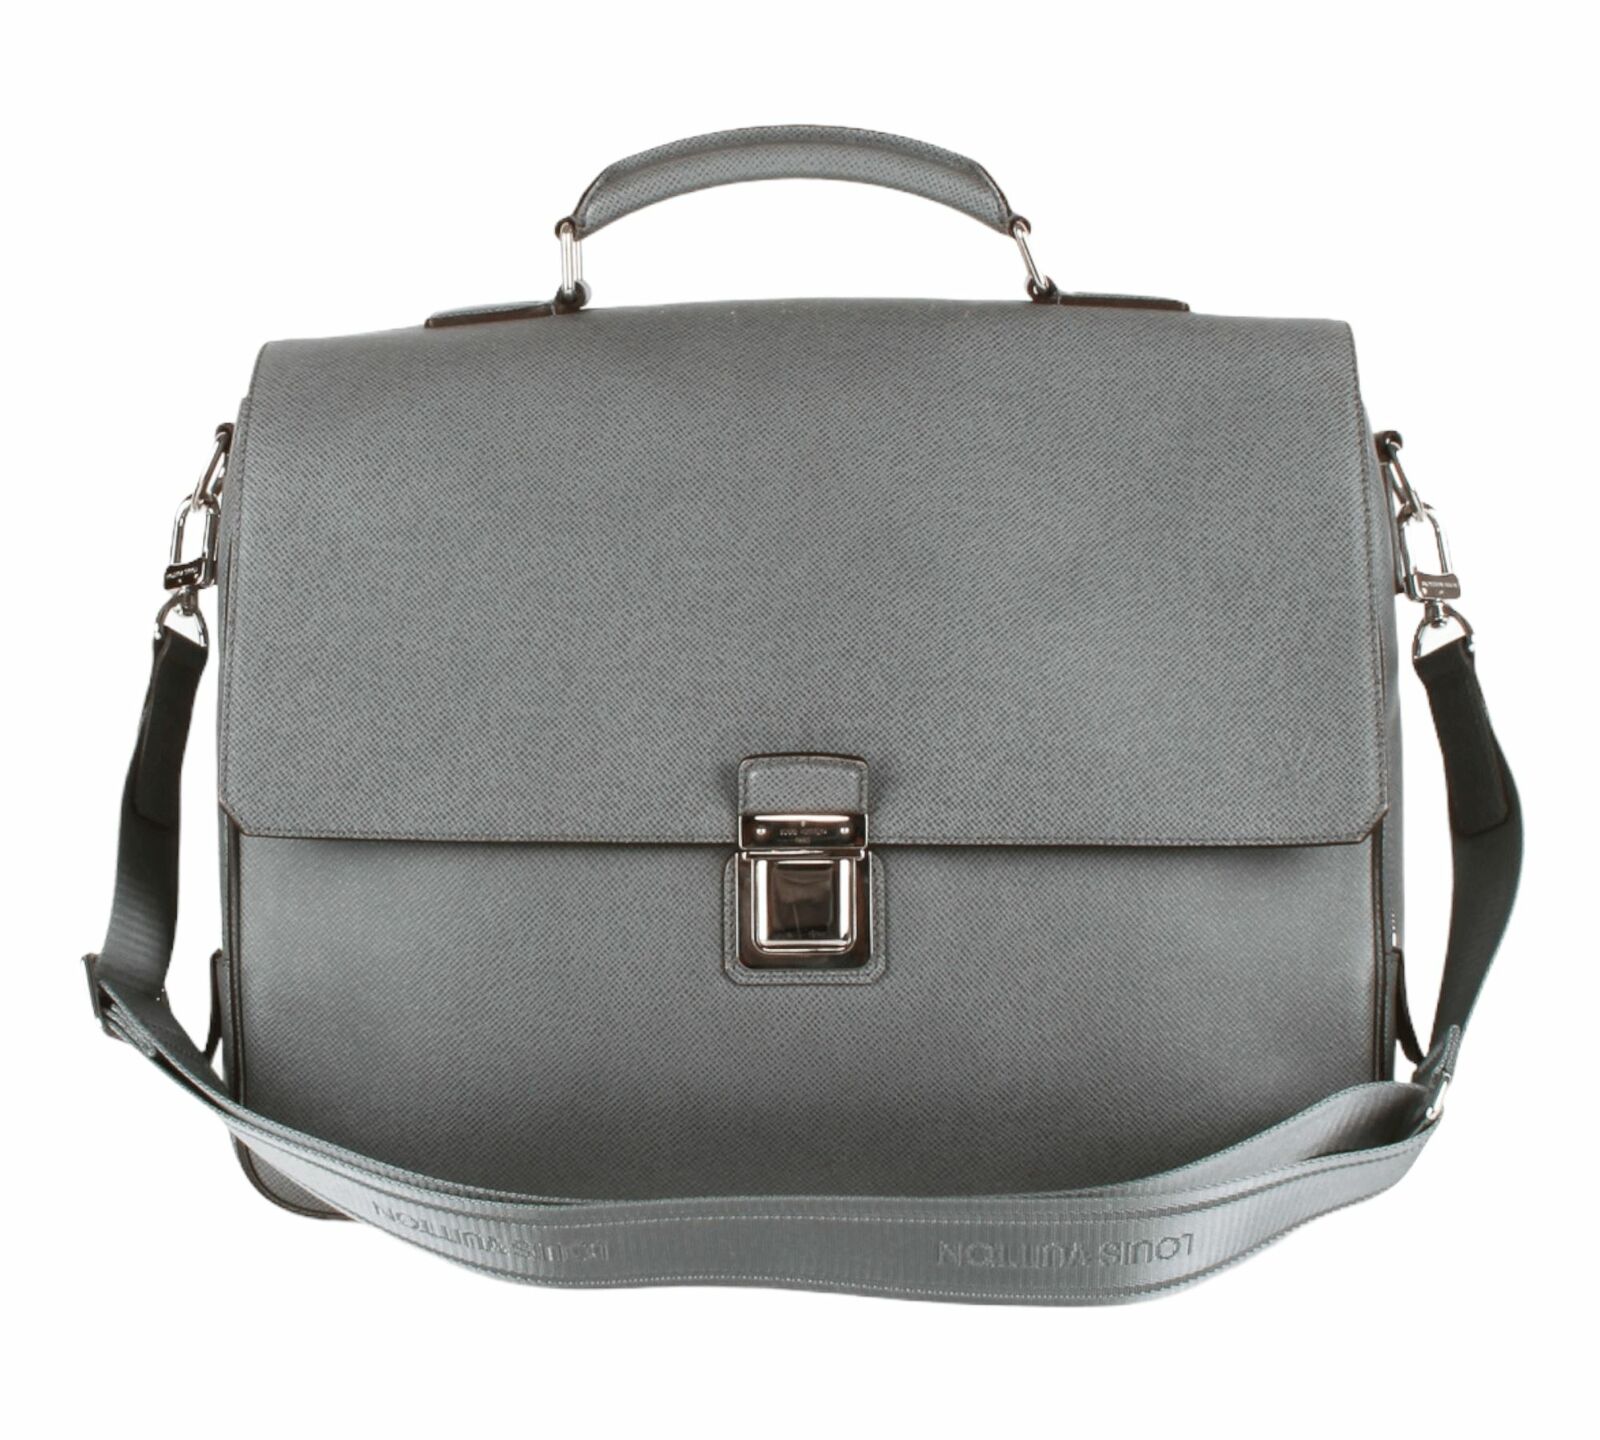 Bags Briefcases Louis Vuitton LV Outdoor Messenger New